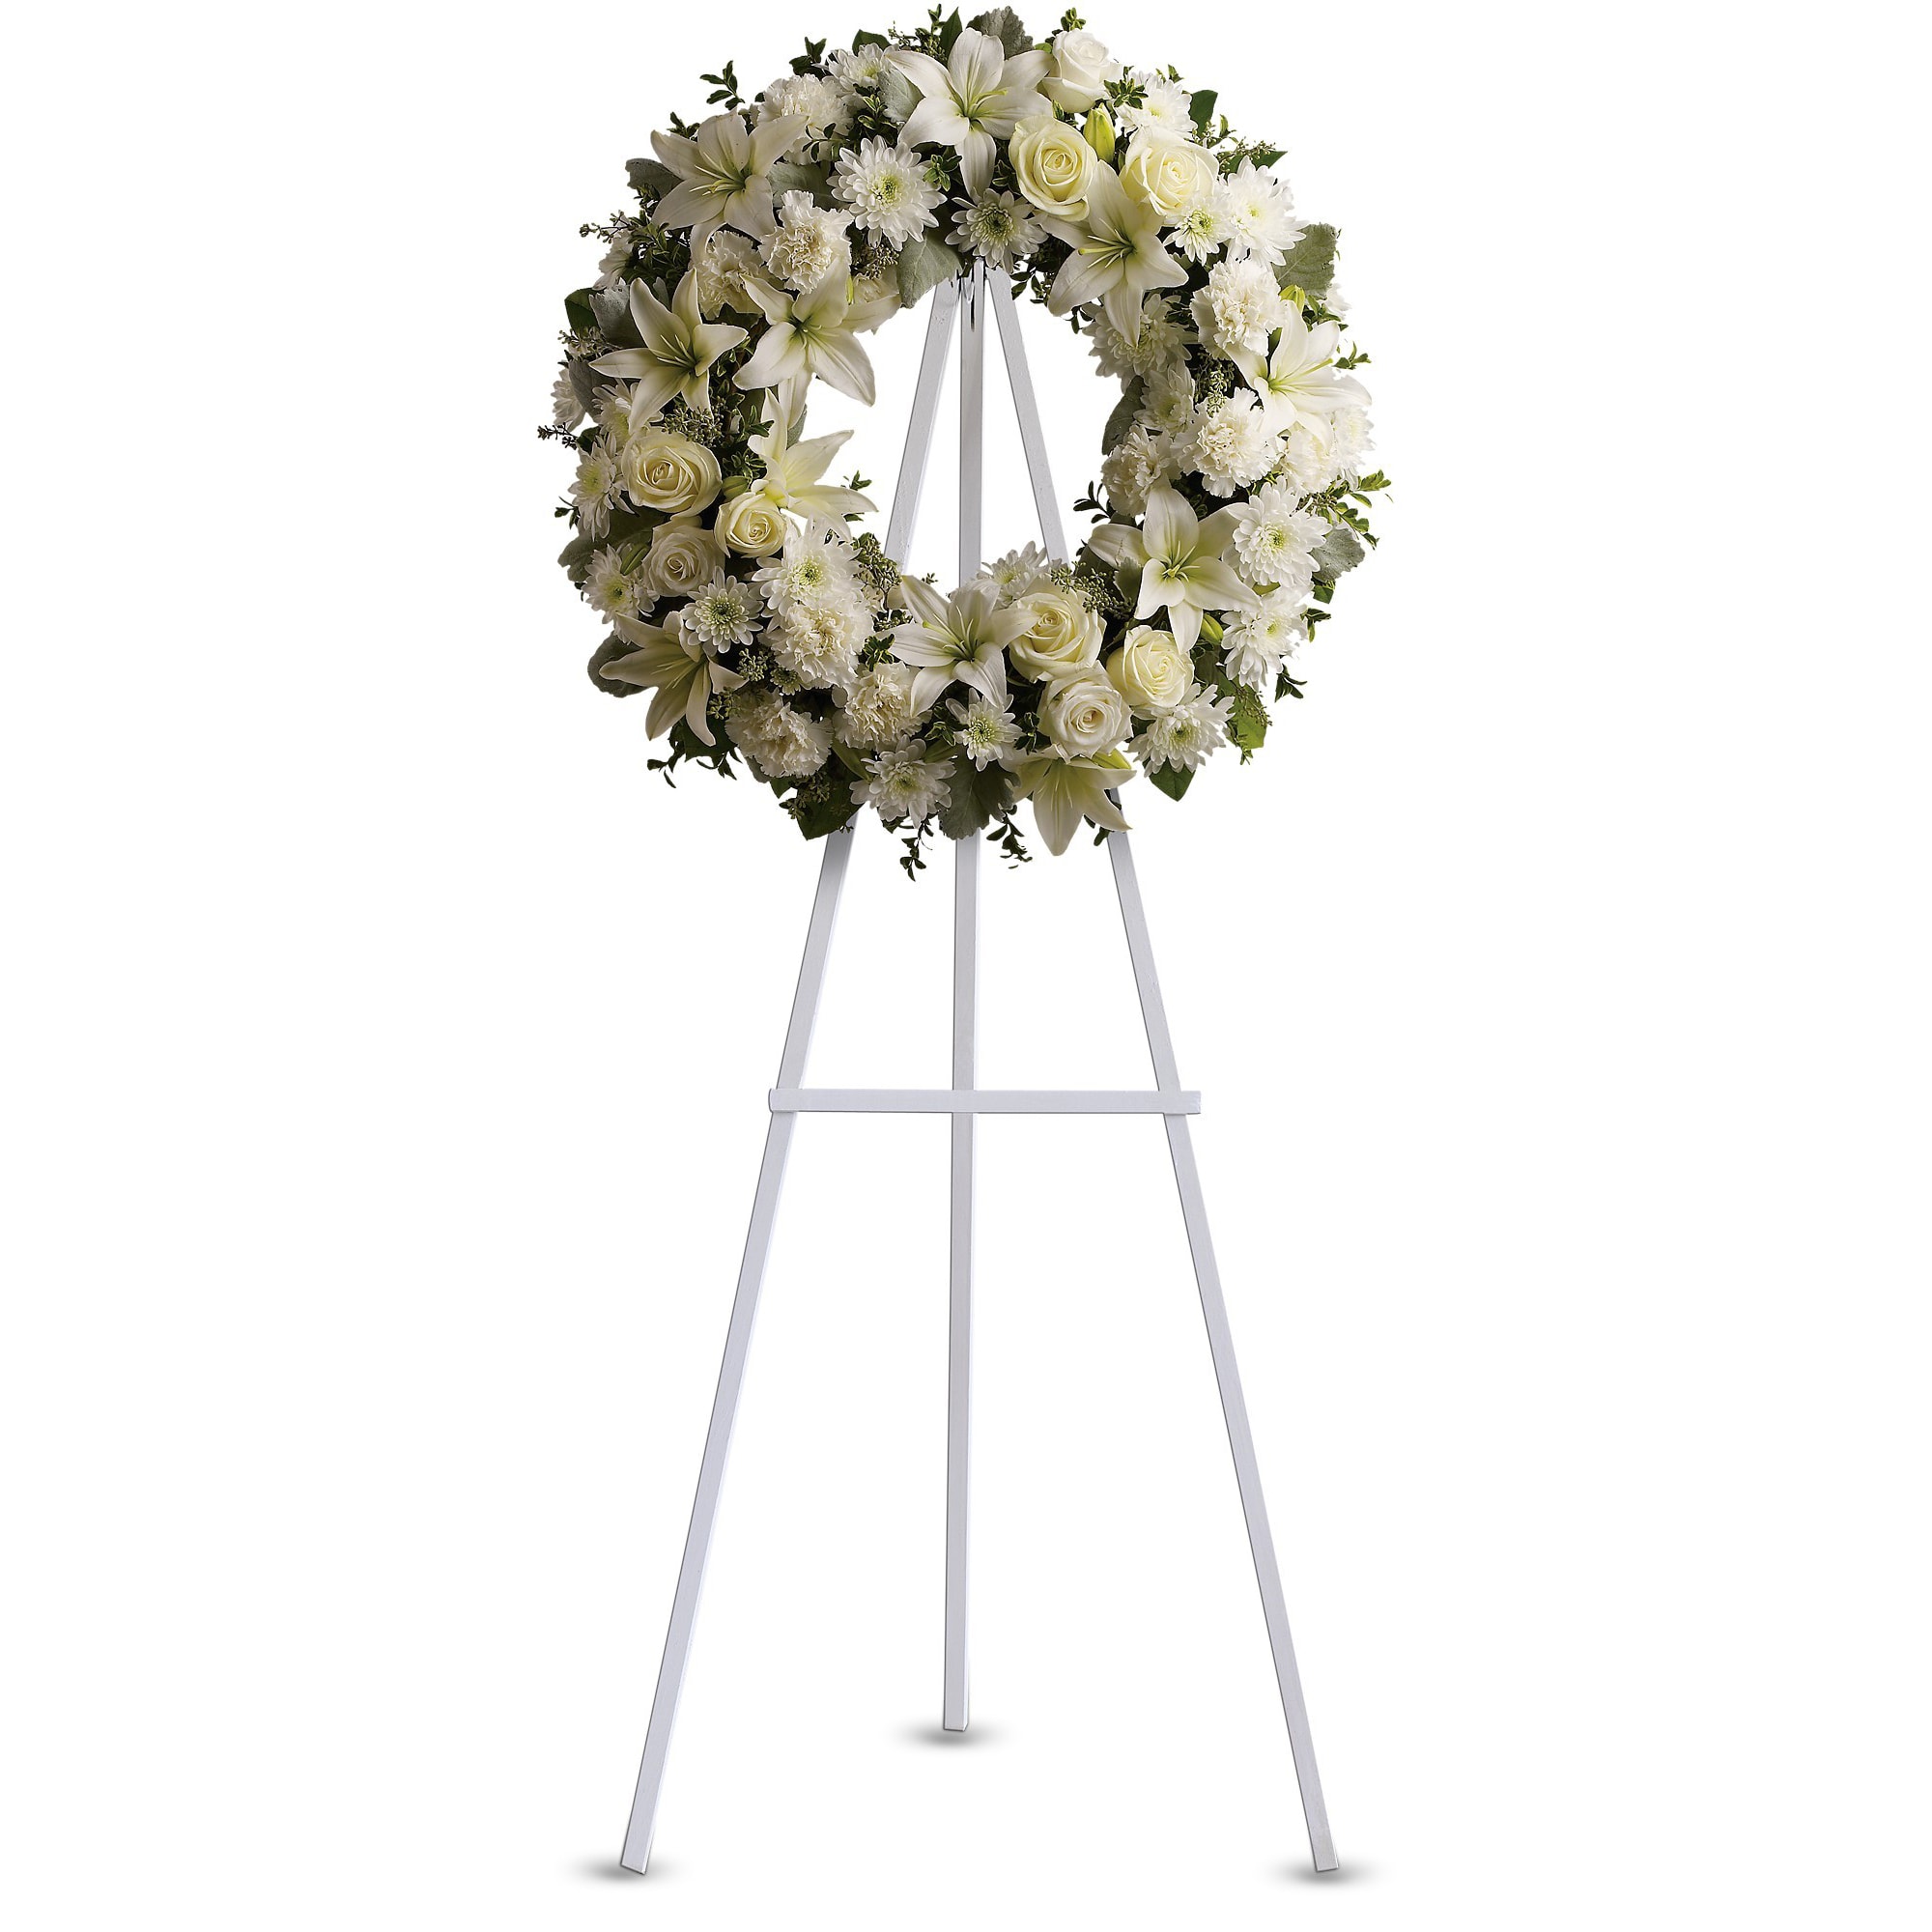 Funeral Wreath Fresh Flowers Stock Photo 1505899502 | Shutterstock